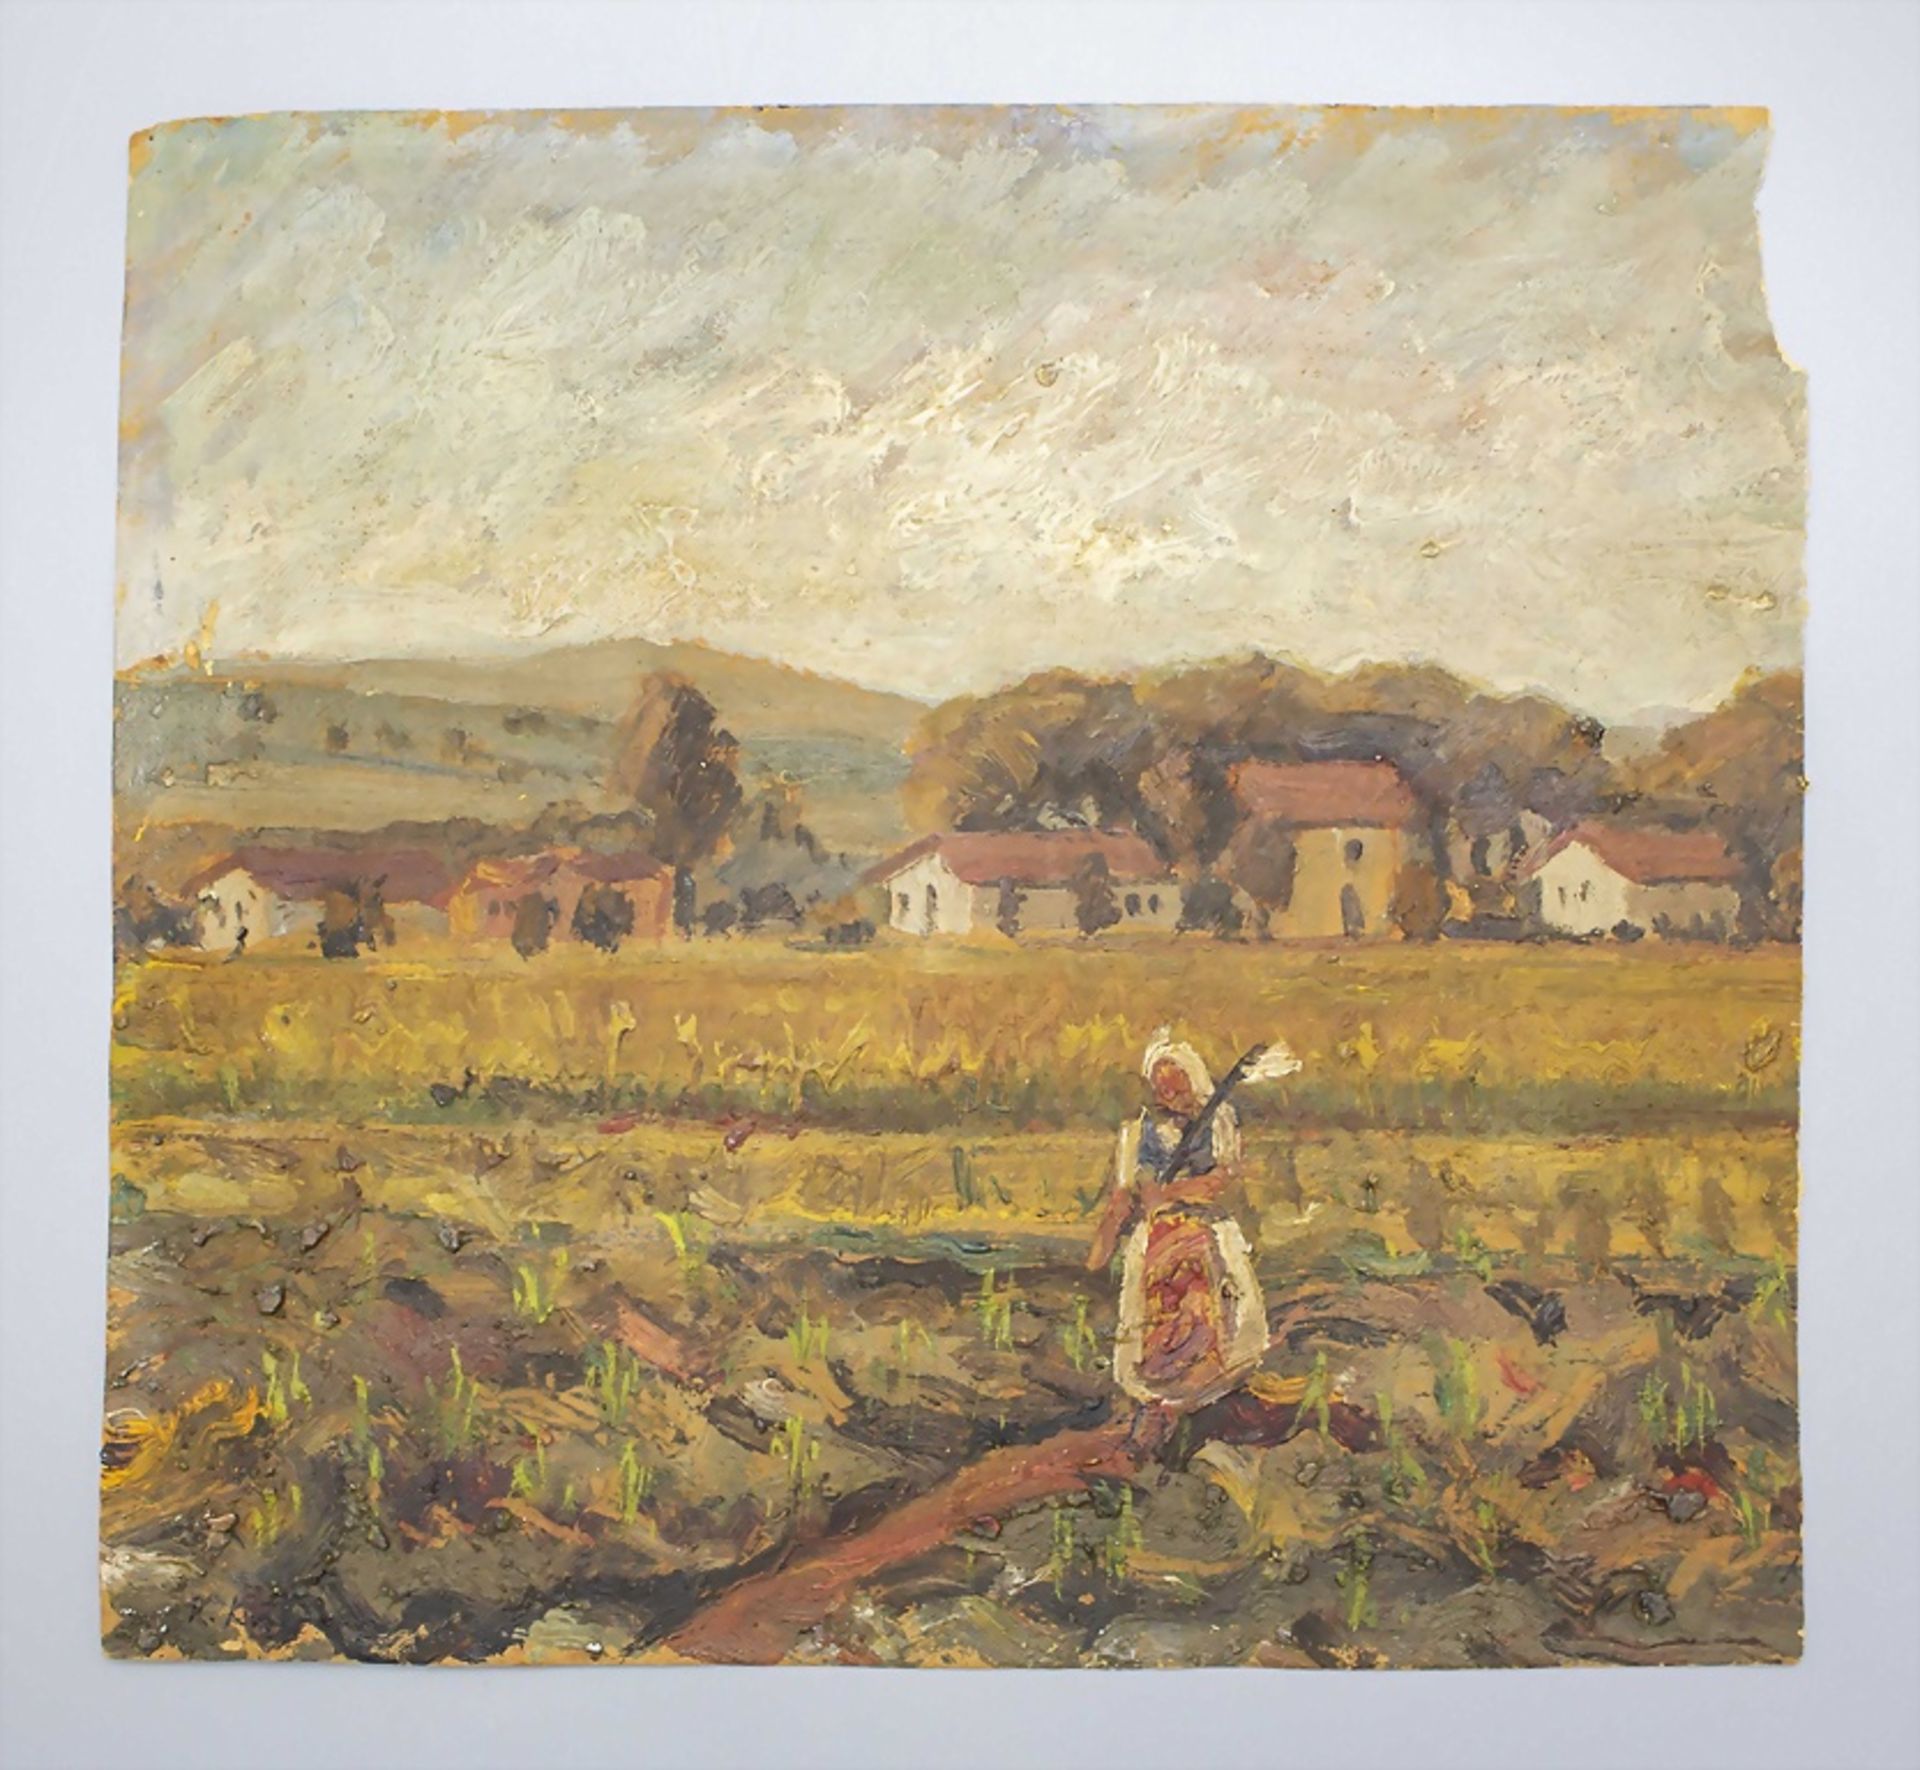 Künstler des 20. Jahrhunderts, K. Kirkorov, 'Bäuerin auf Feld' / 'Peasant woman on field', um 1940